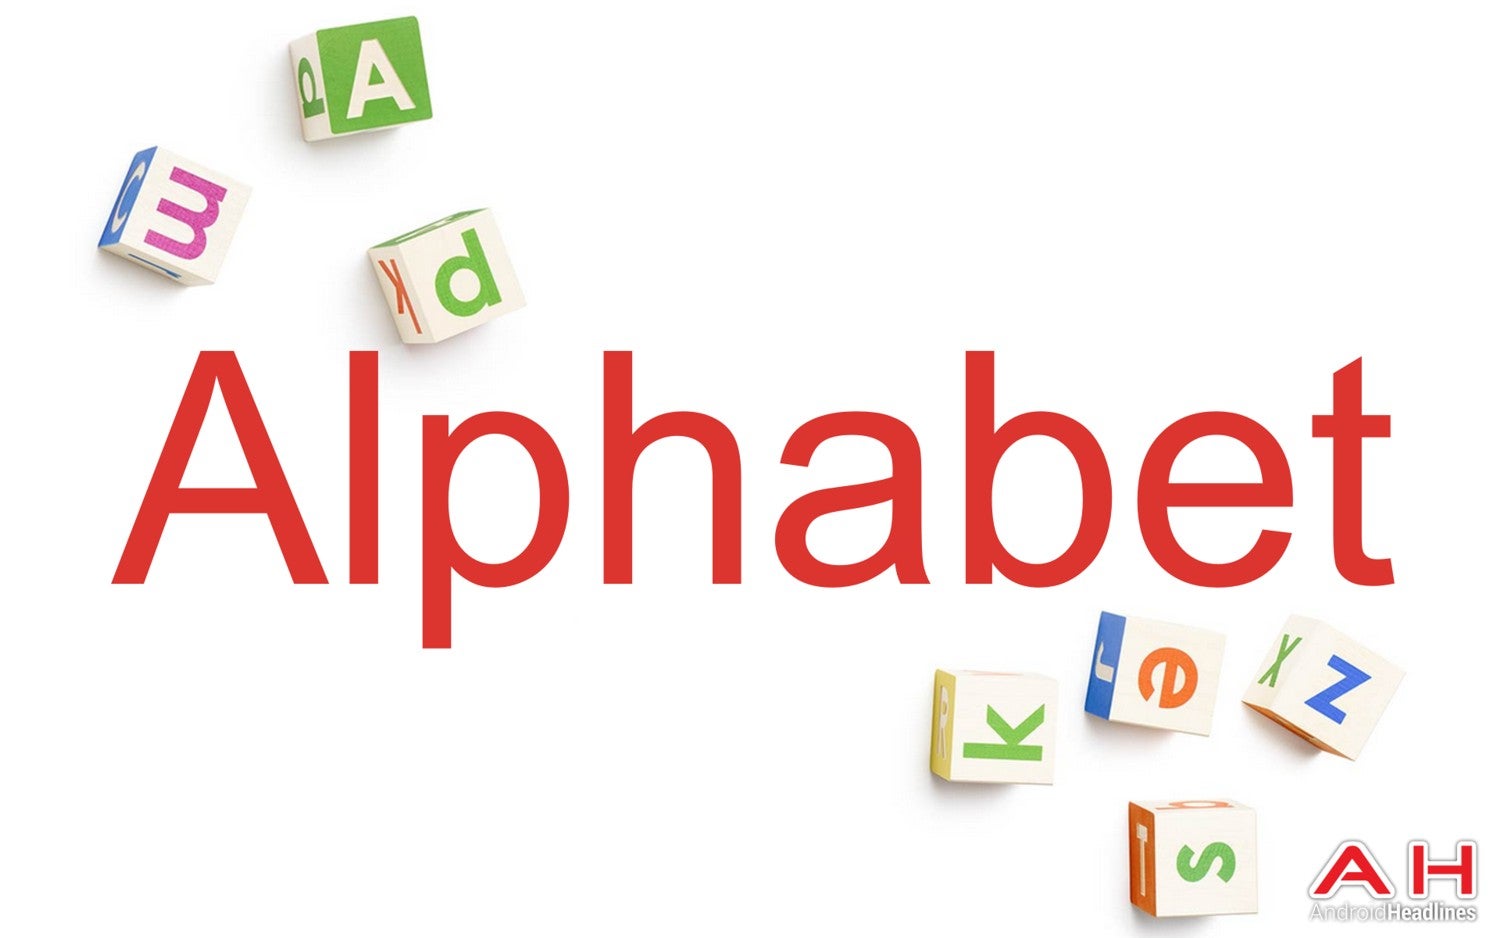 What is Alphabet?